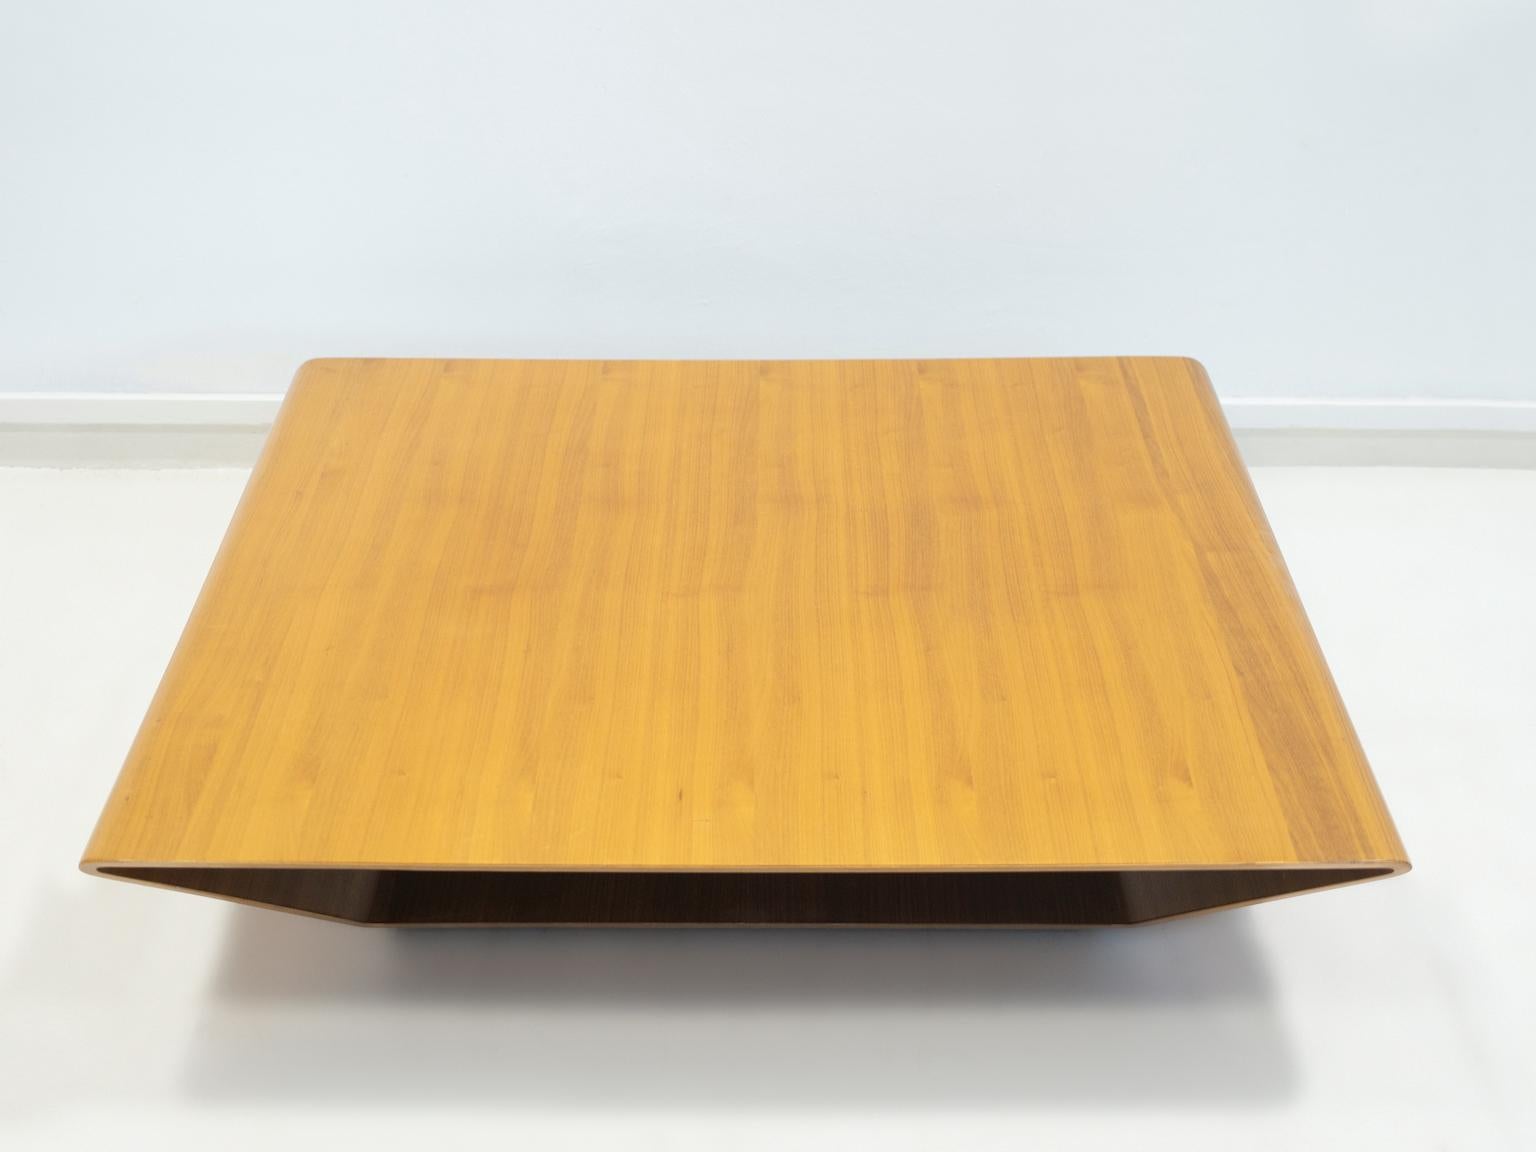 Brasilia Oak Veneer Coffee Table by Claesson, Koivisto and Rune 1